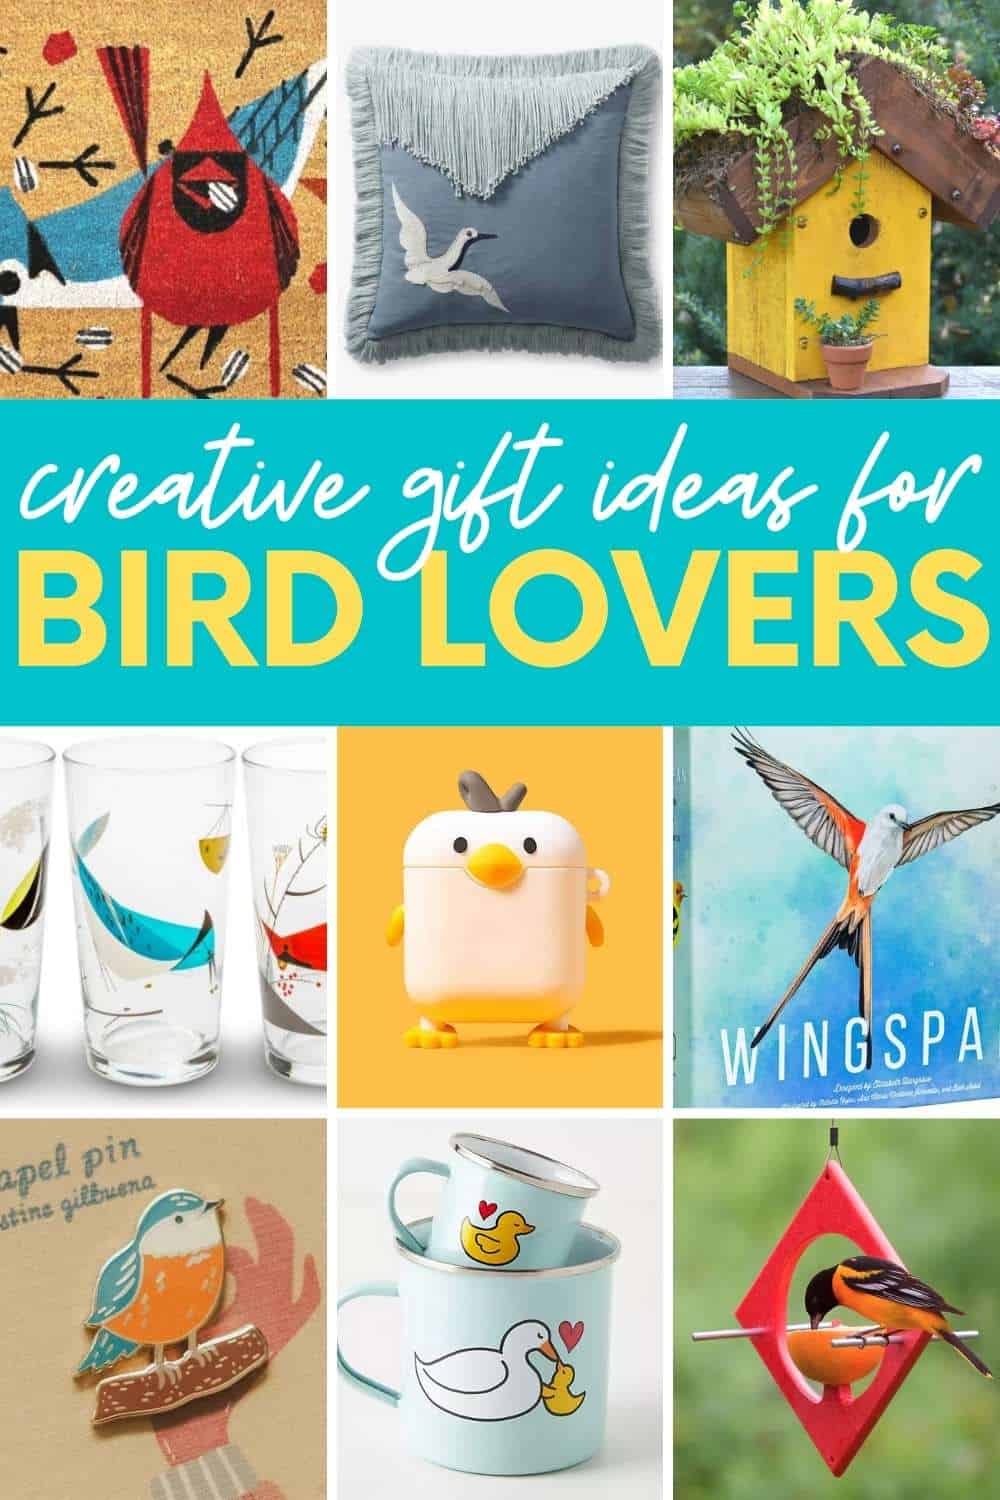 https://growfully.com/wp-content/uploads/2021/10/gifts-bird-lover-header.jpg